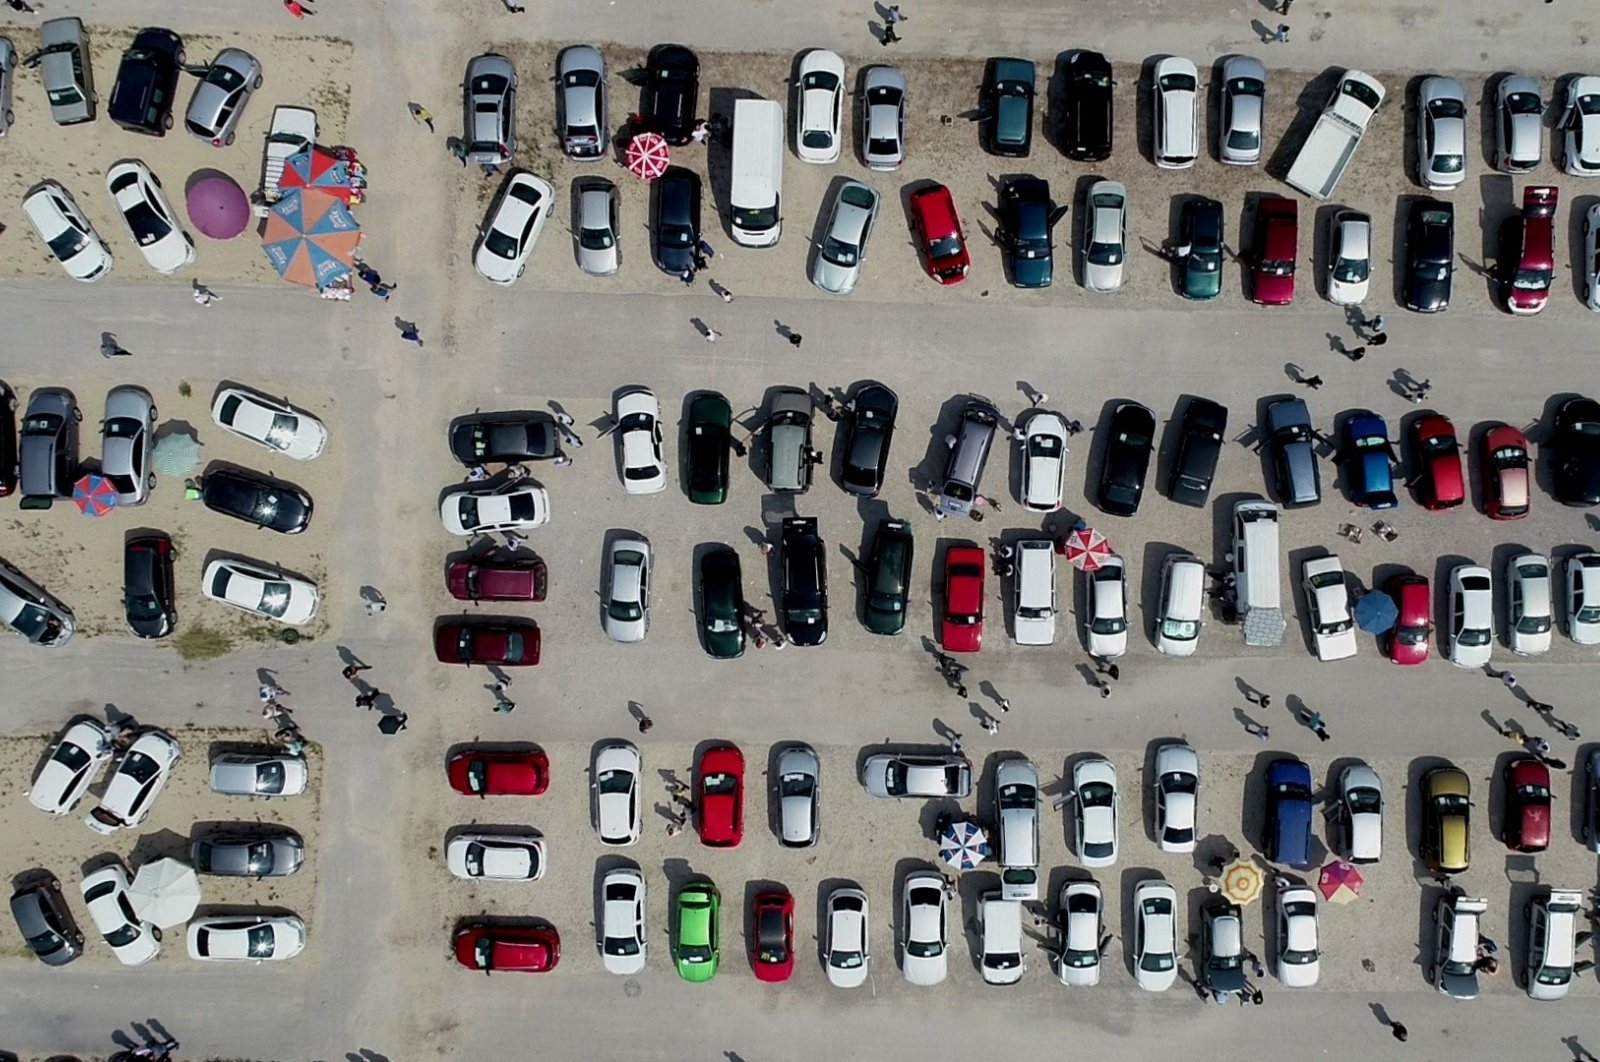 Used cars fill a secondhand auto market in northwestern Bursa province, Turkey, July 26, 2020. (IHA Photo)